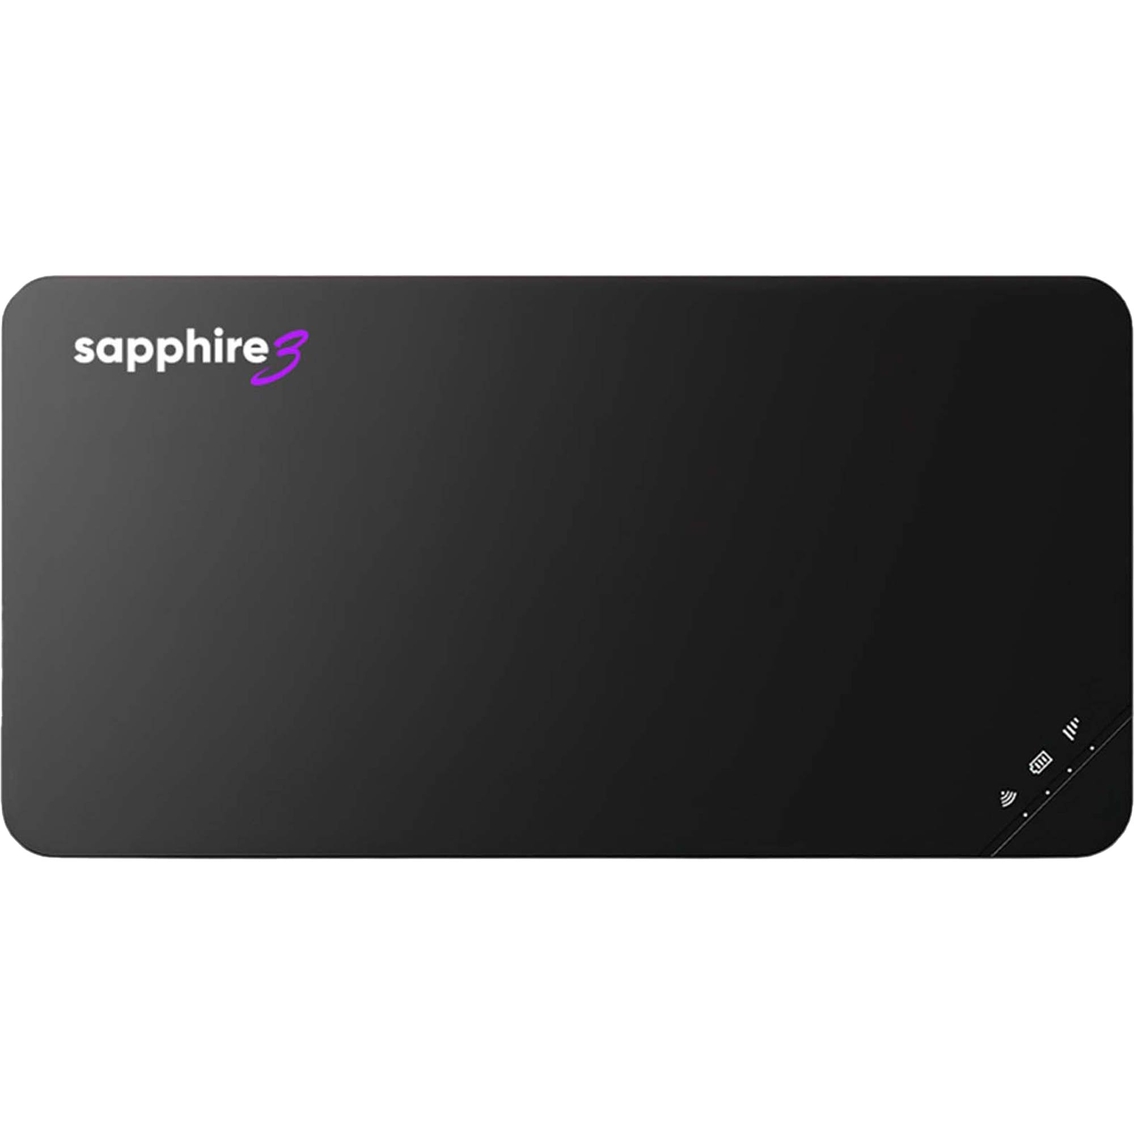 Sapphire 3 Portable Hotspot - Image 3 of 6